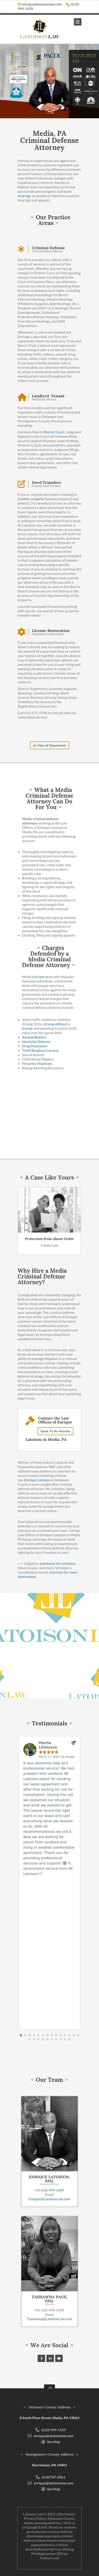 Latoison Law - Media PA Lawyers